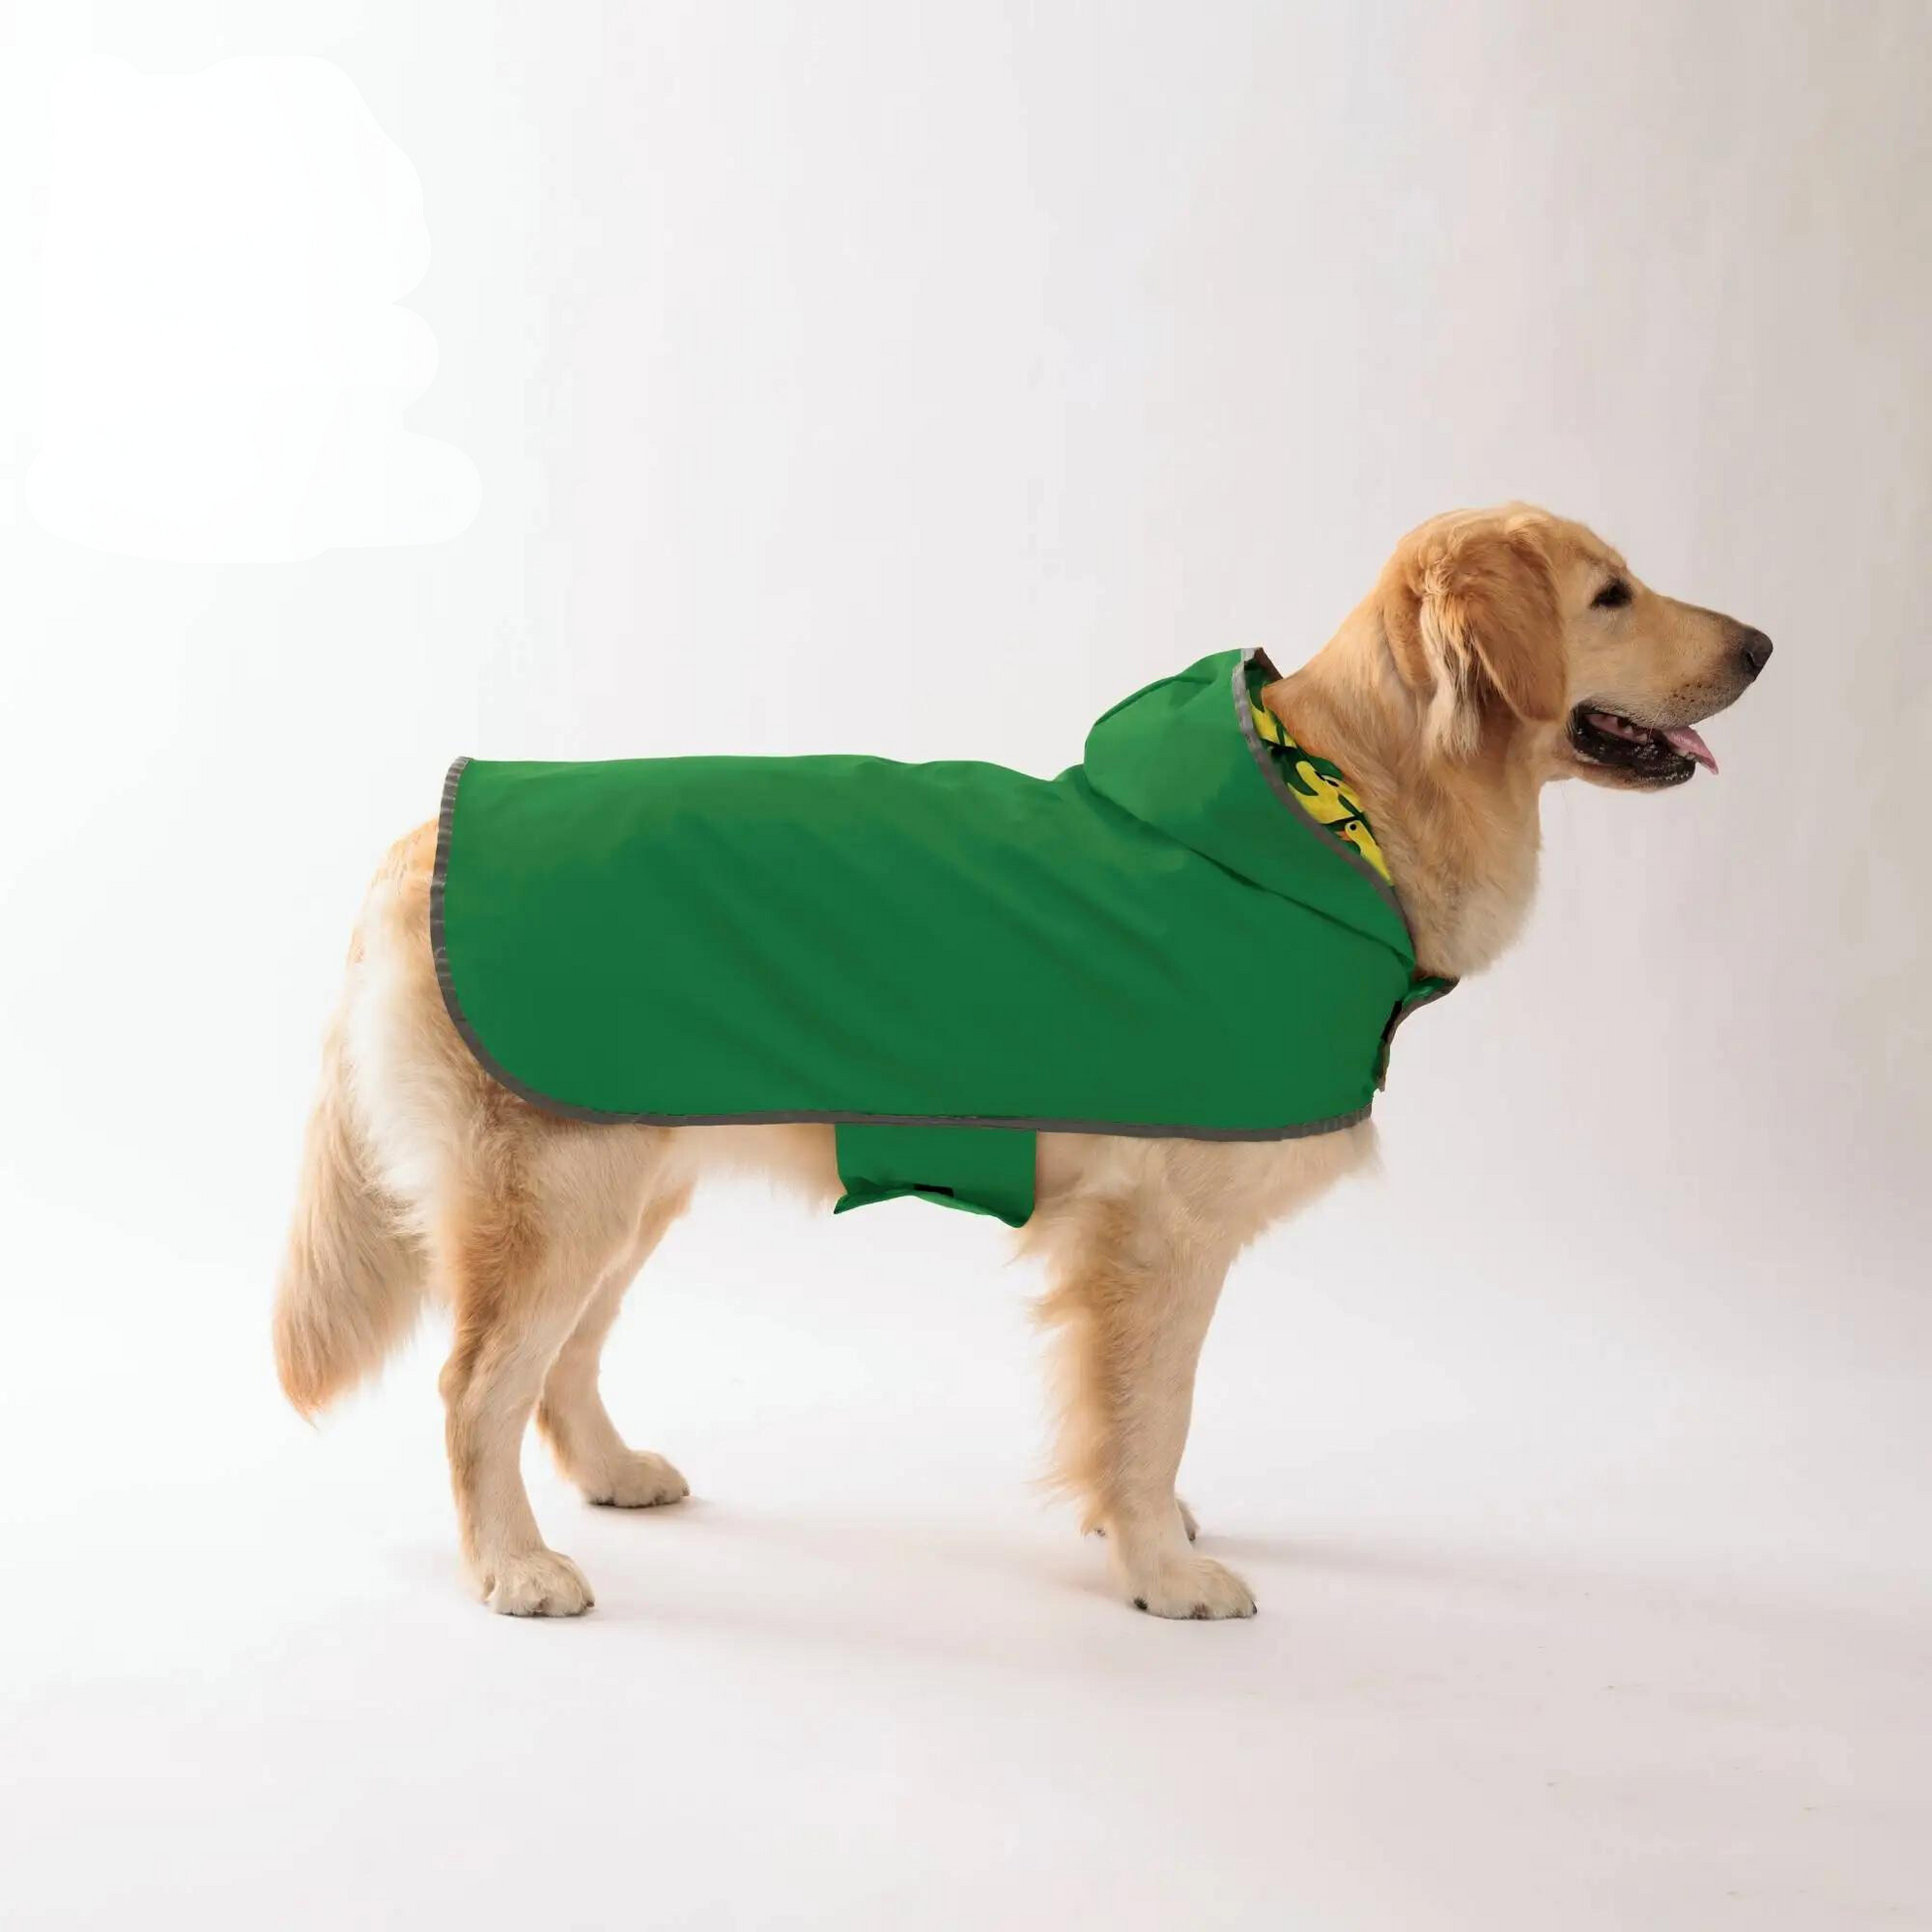 Reversible Rain Cape for Dogs - Green